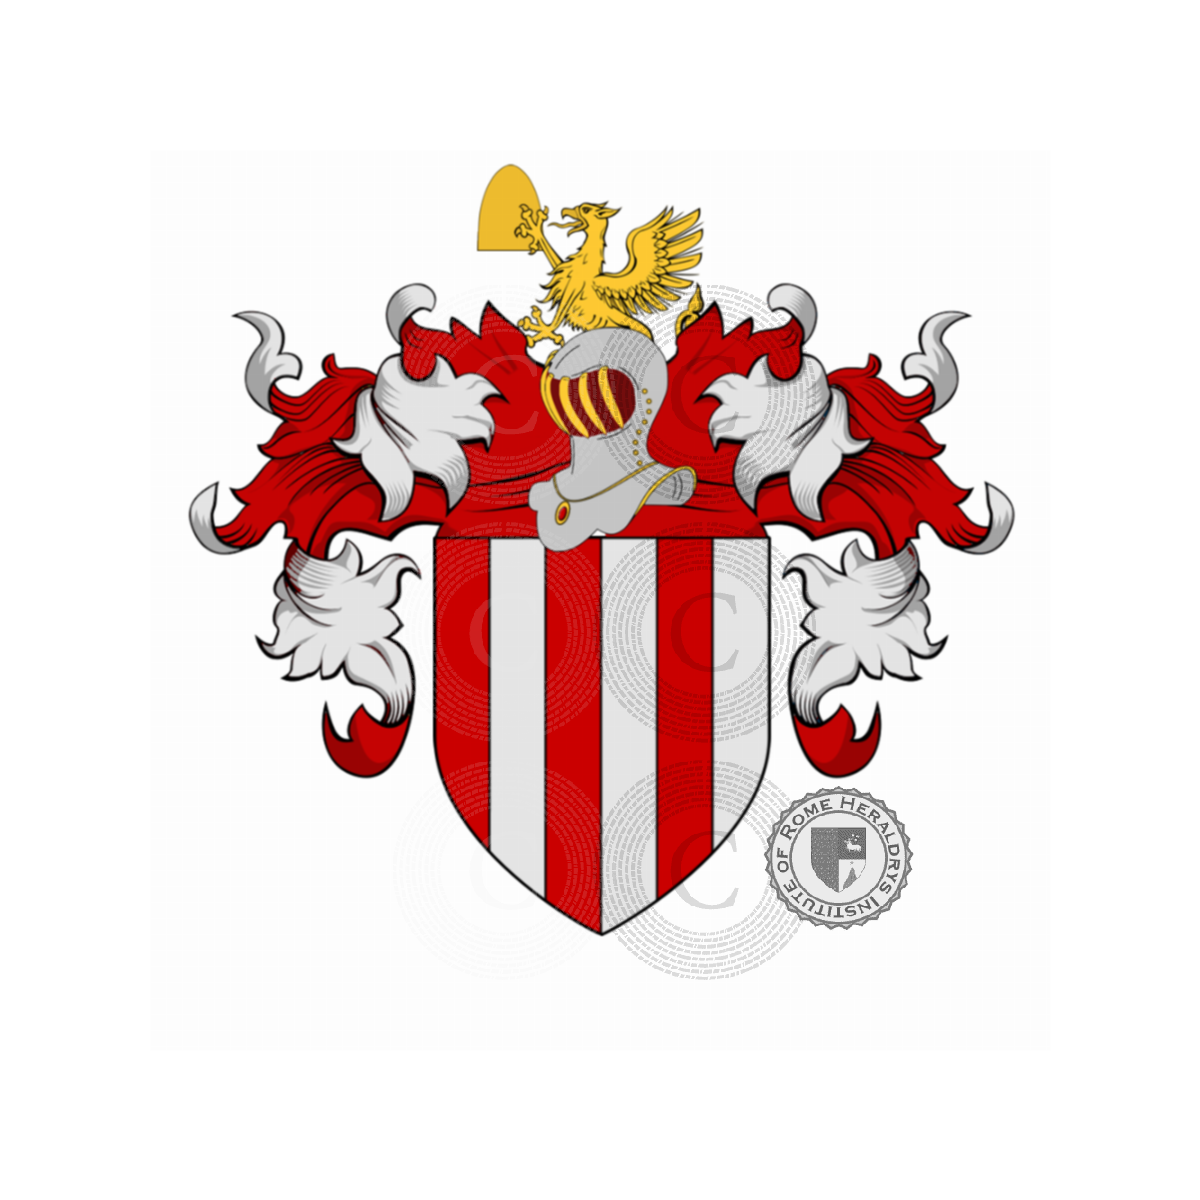 Wappen der FamilieAlto, d'Alto,Salto